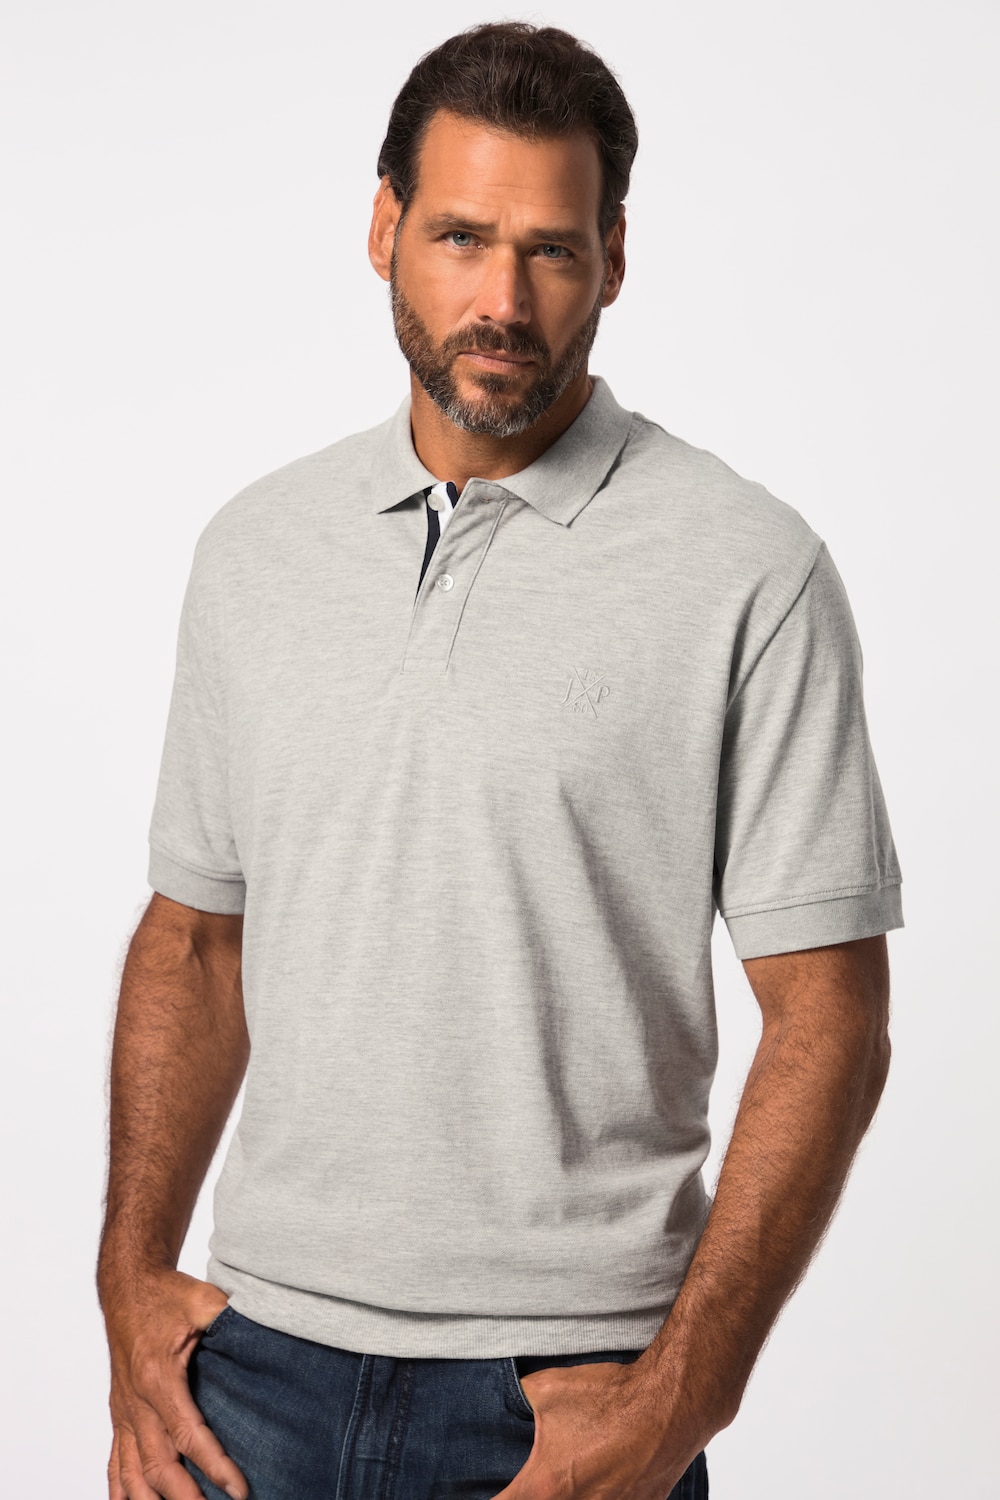 Große Größen Polo-Shirt, Herren, grau, Größe: 7XL, Baumwolle, JP1880